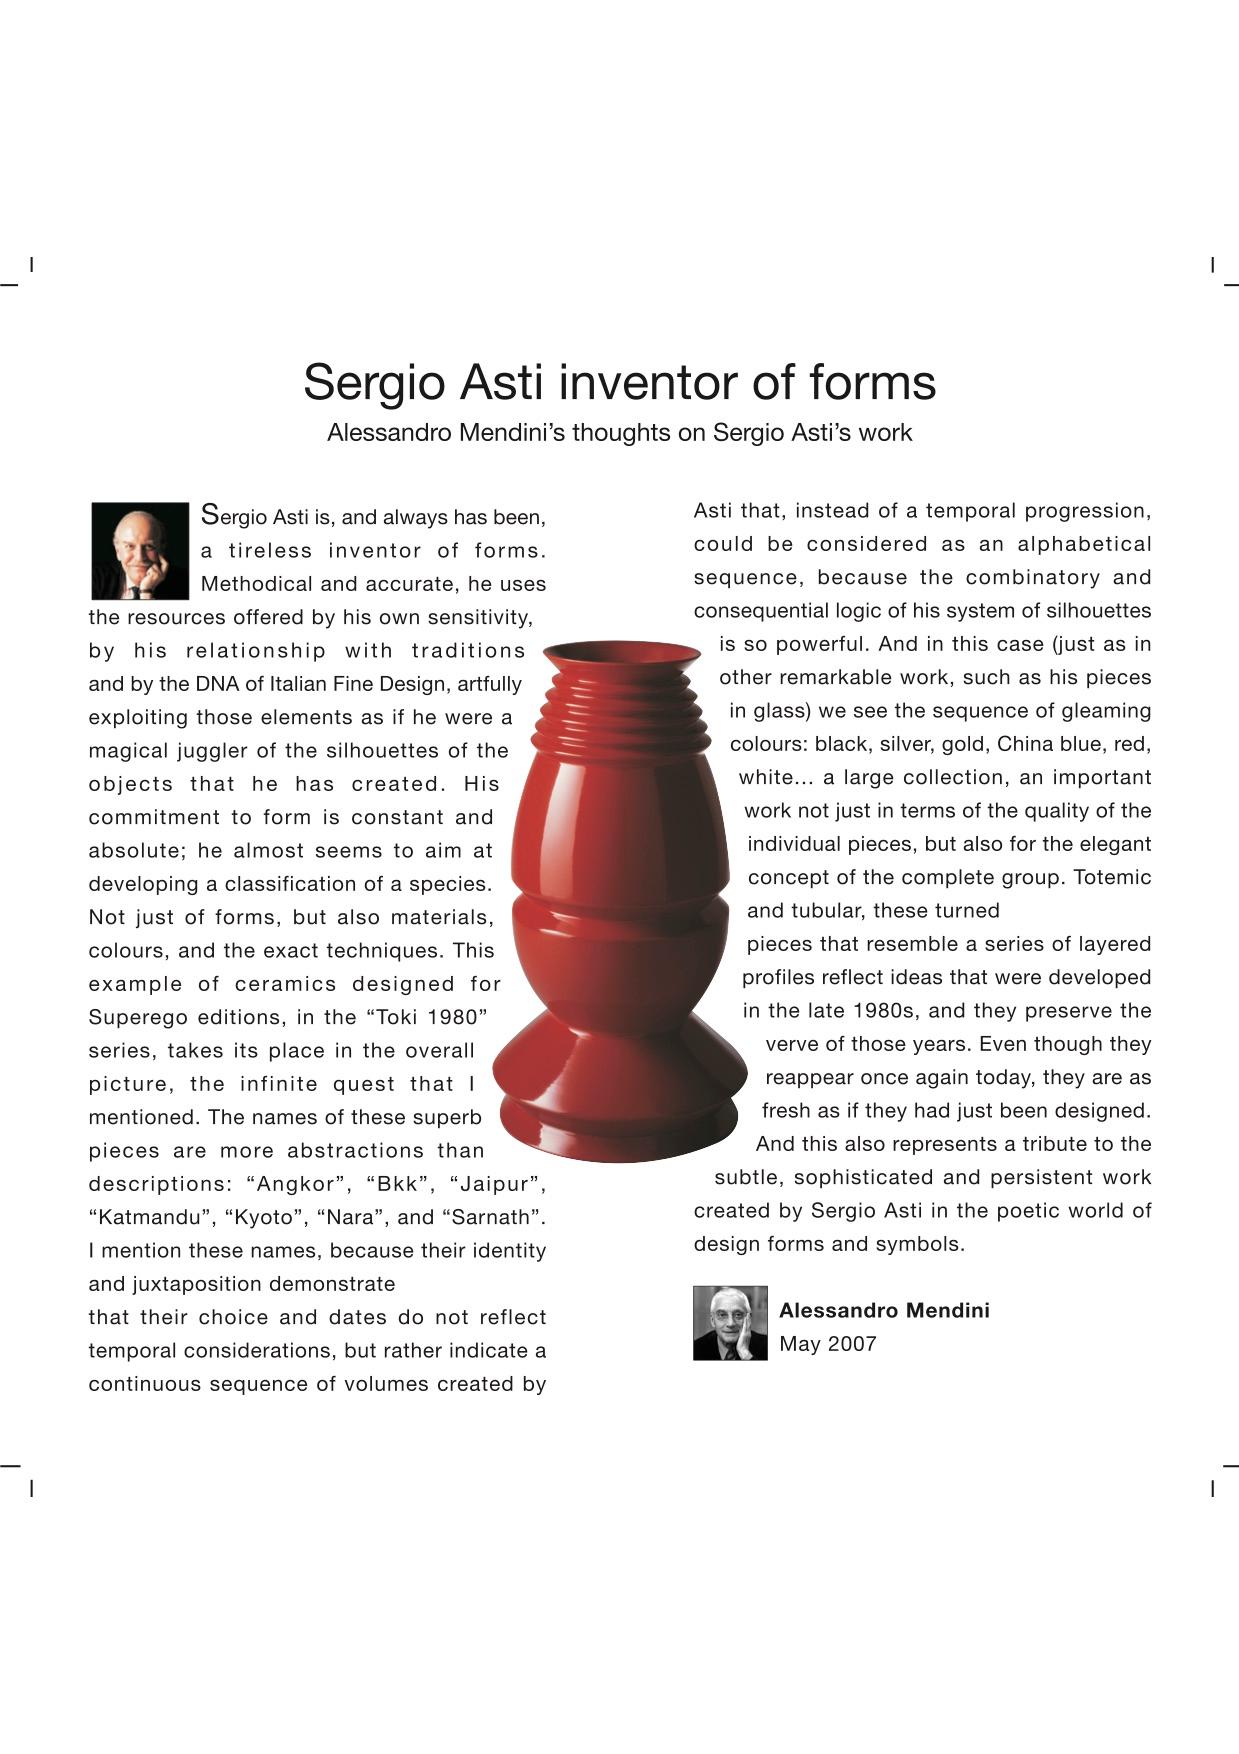 Céramique Vase modèle Nara de Sergio Asti pour Superego Editions en vente